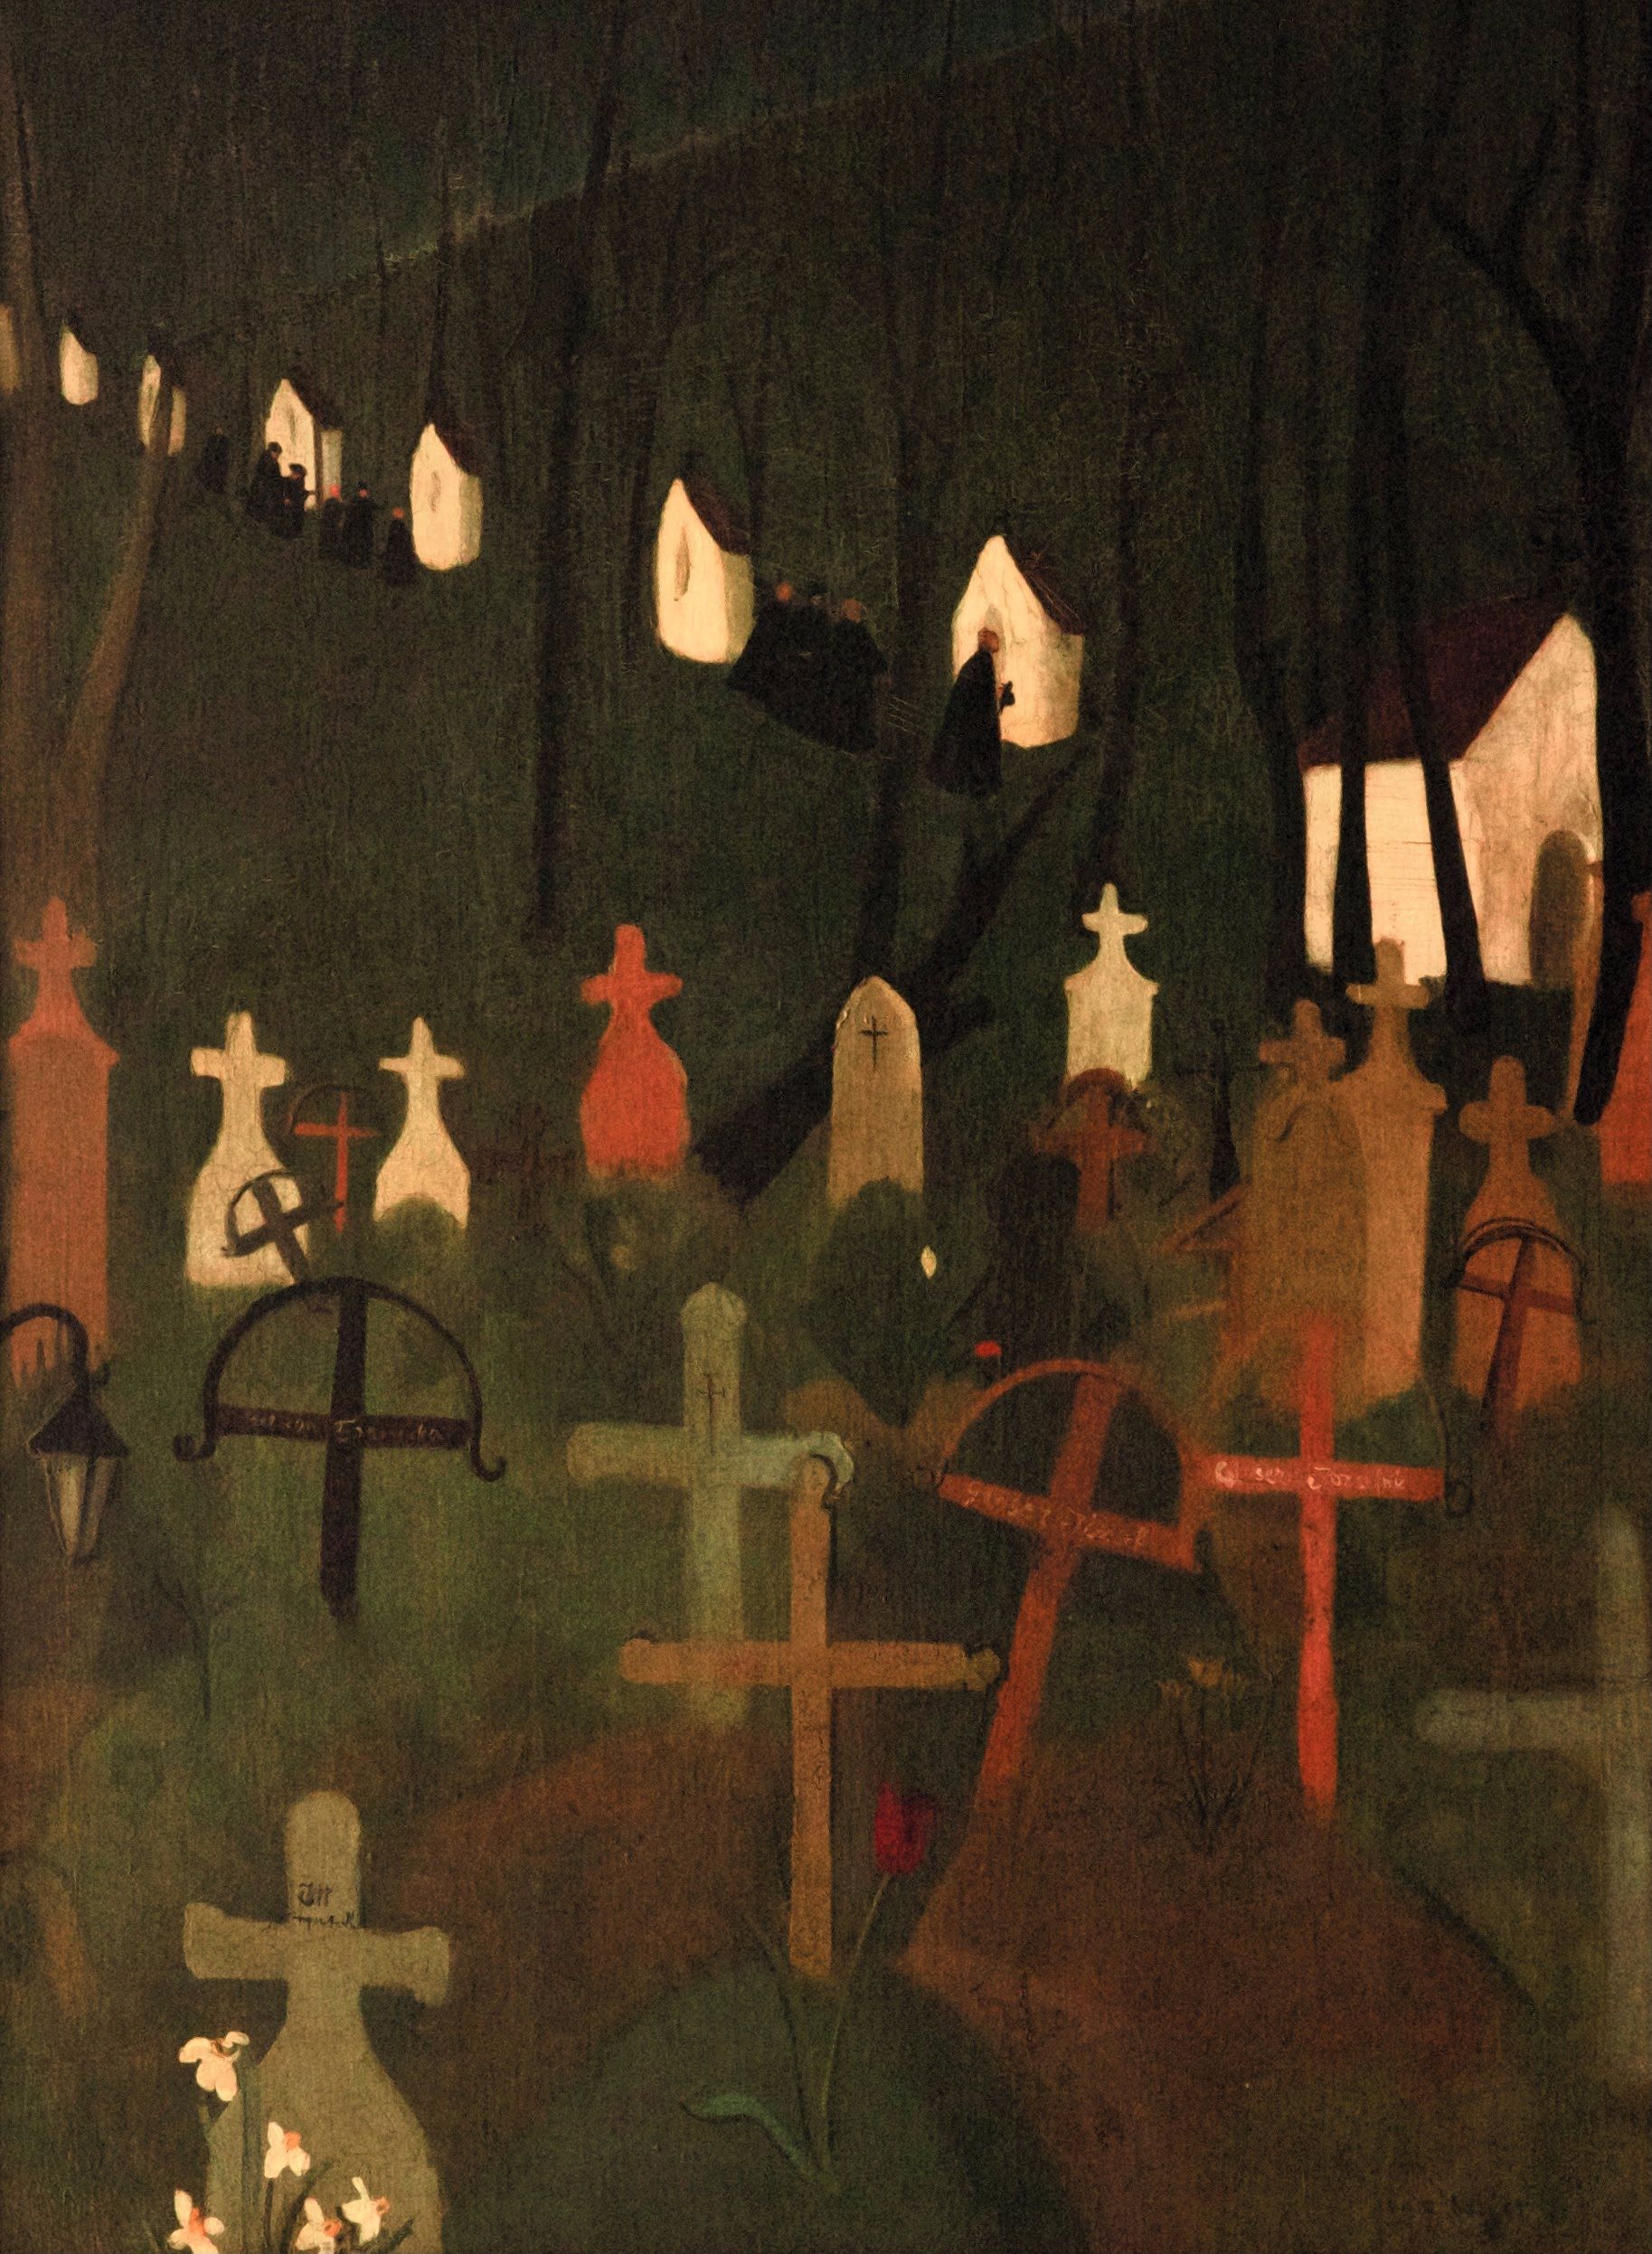 Boldog temető by Amrita Sher-Gil - 1939 - 75 x 100.5 cm 